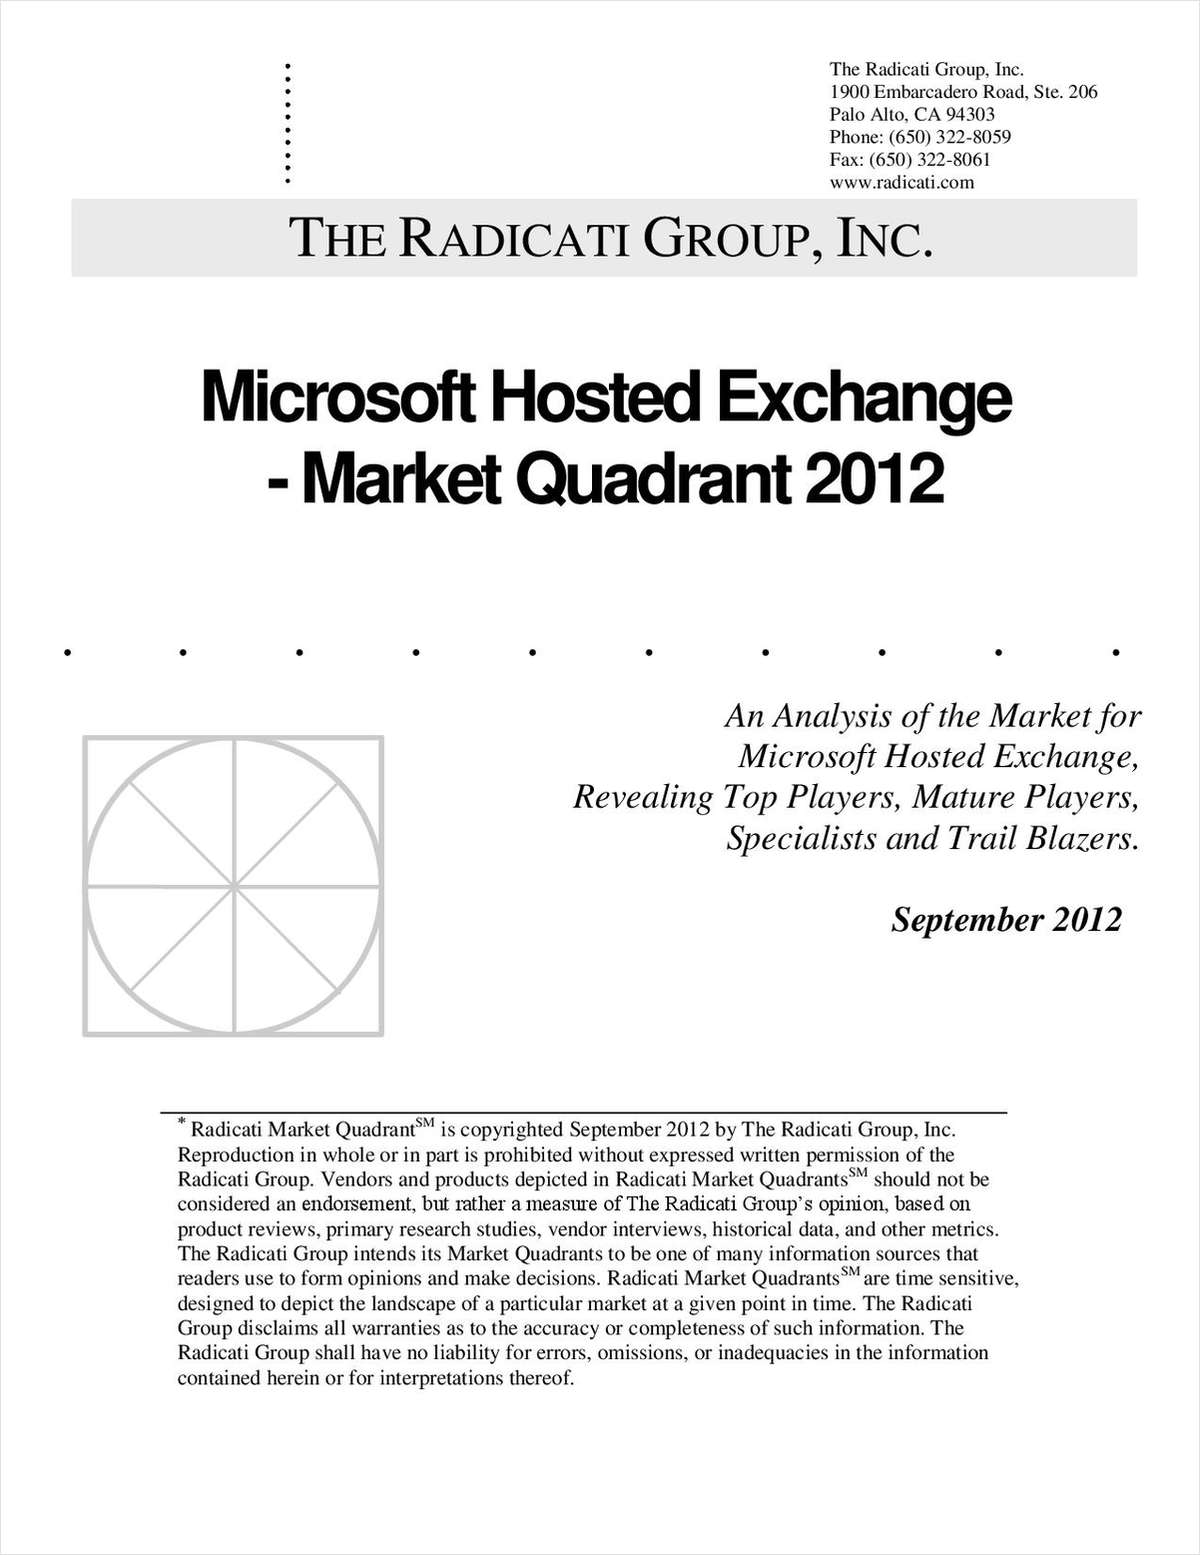 Microsoft Hosted Exchange Market Quadrant